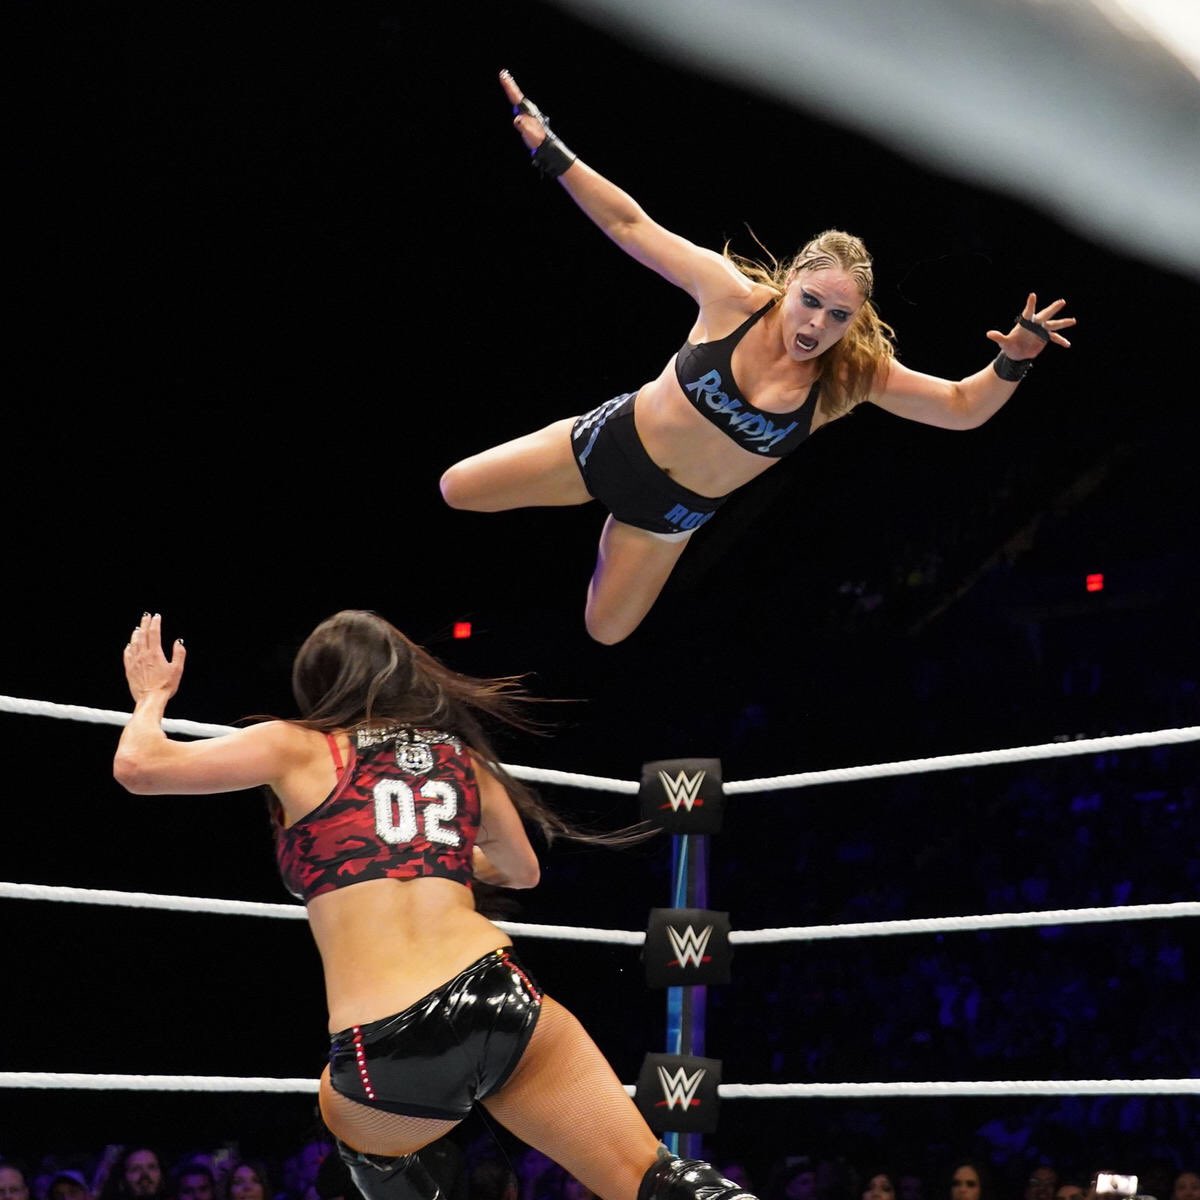 RT @8navyblue: Ronda Rousey vs Nikki Bella - WWE Evolution #WWERaw https://t.co/5EGtTwae2F